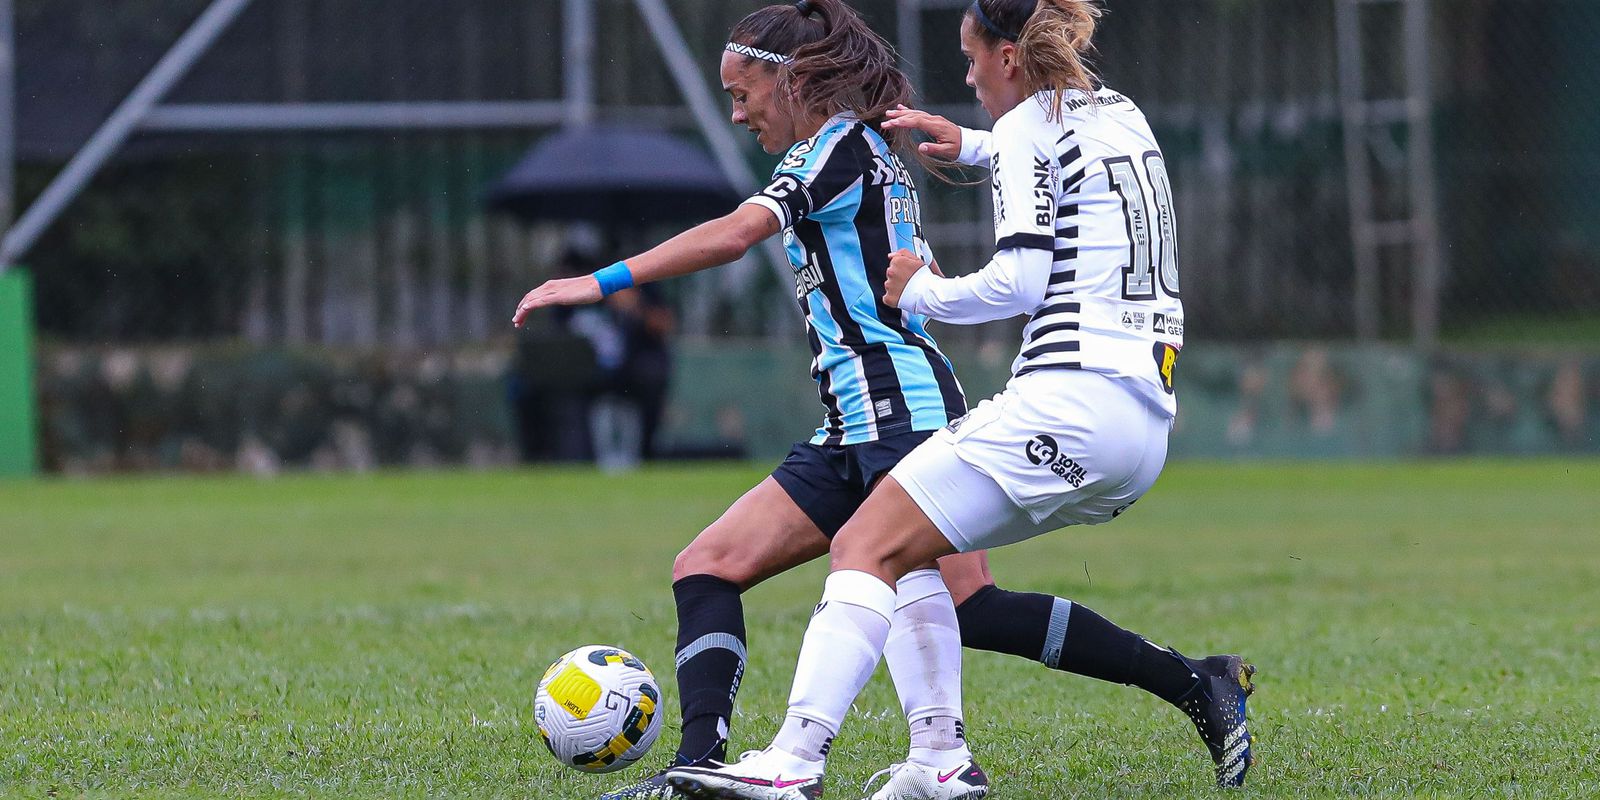 Grêmio starts a draw with Atlético-MG in the Brazilian Women's Championship